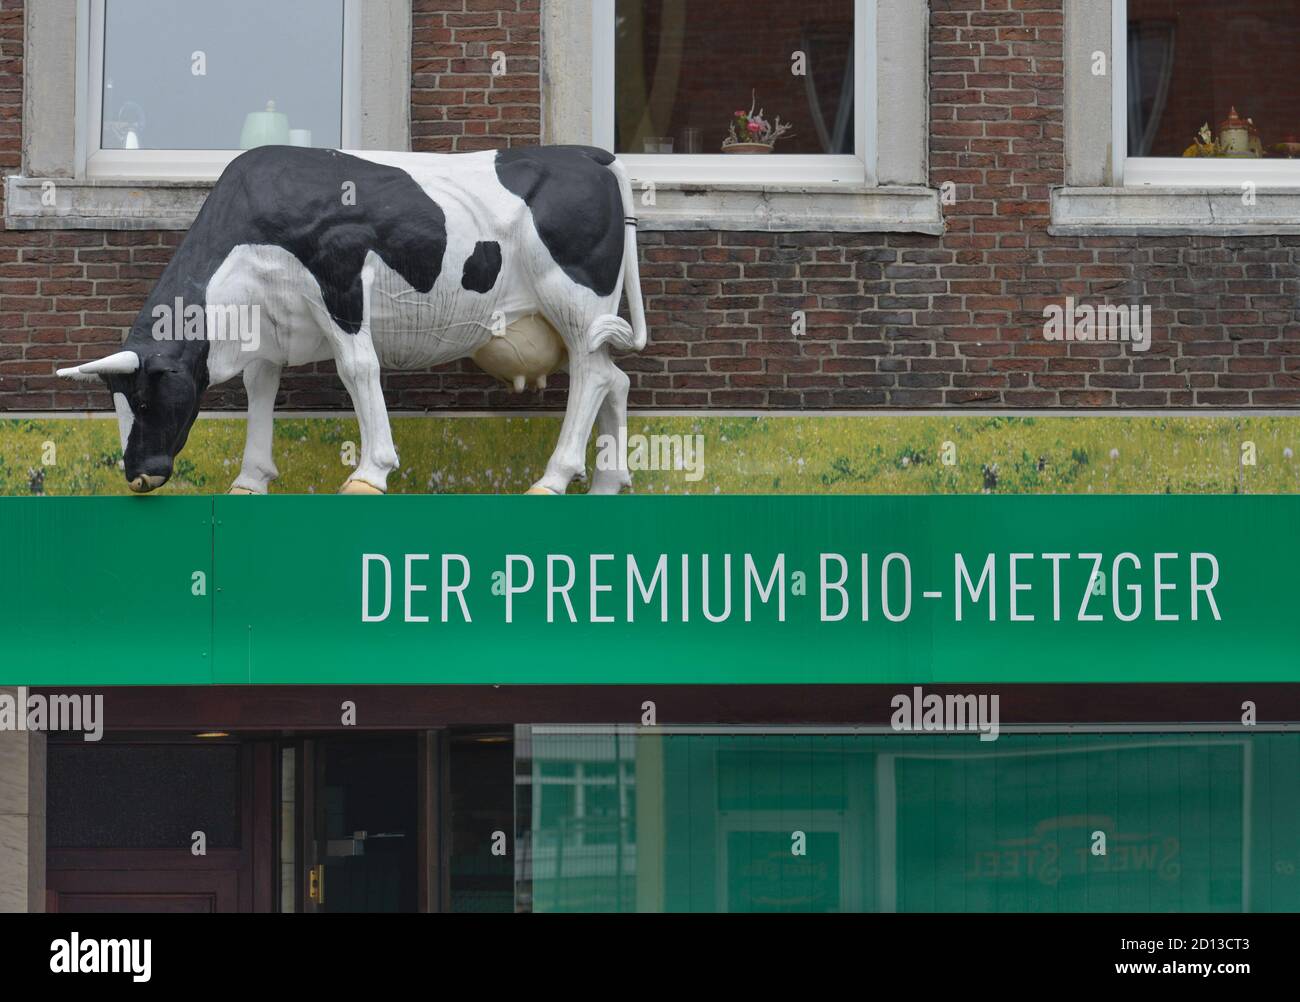 Cow biobutcher Flying, advertisement, Sandkaulstrasse, Aachen, North Rhine-Westphalia, Germany, Kuh Biometzger Stoebe, Werbung, Nordrhein-Westfalen, D Stock Photo